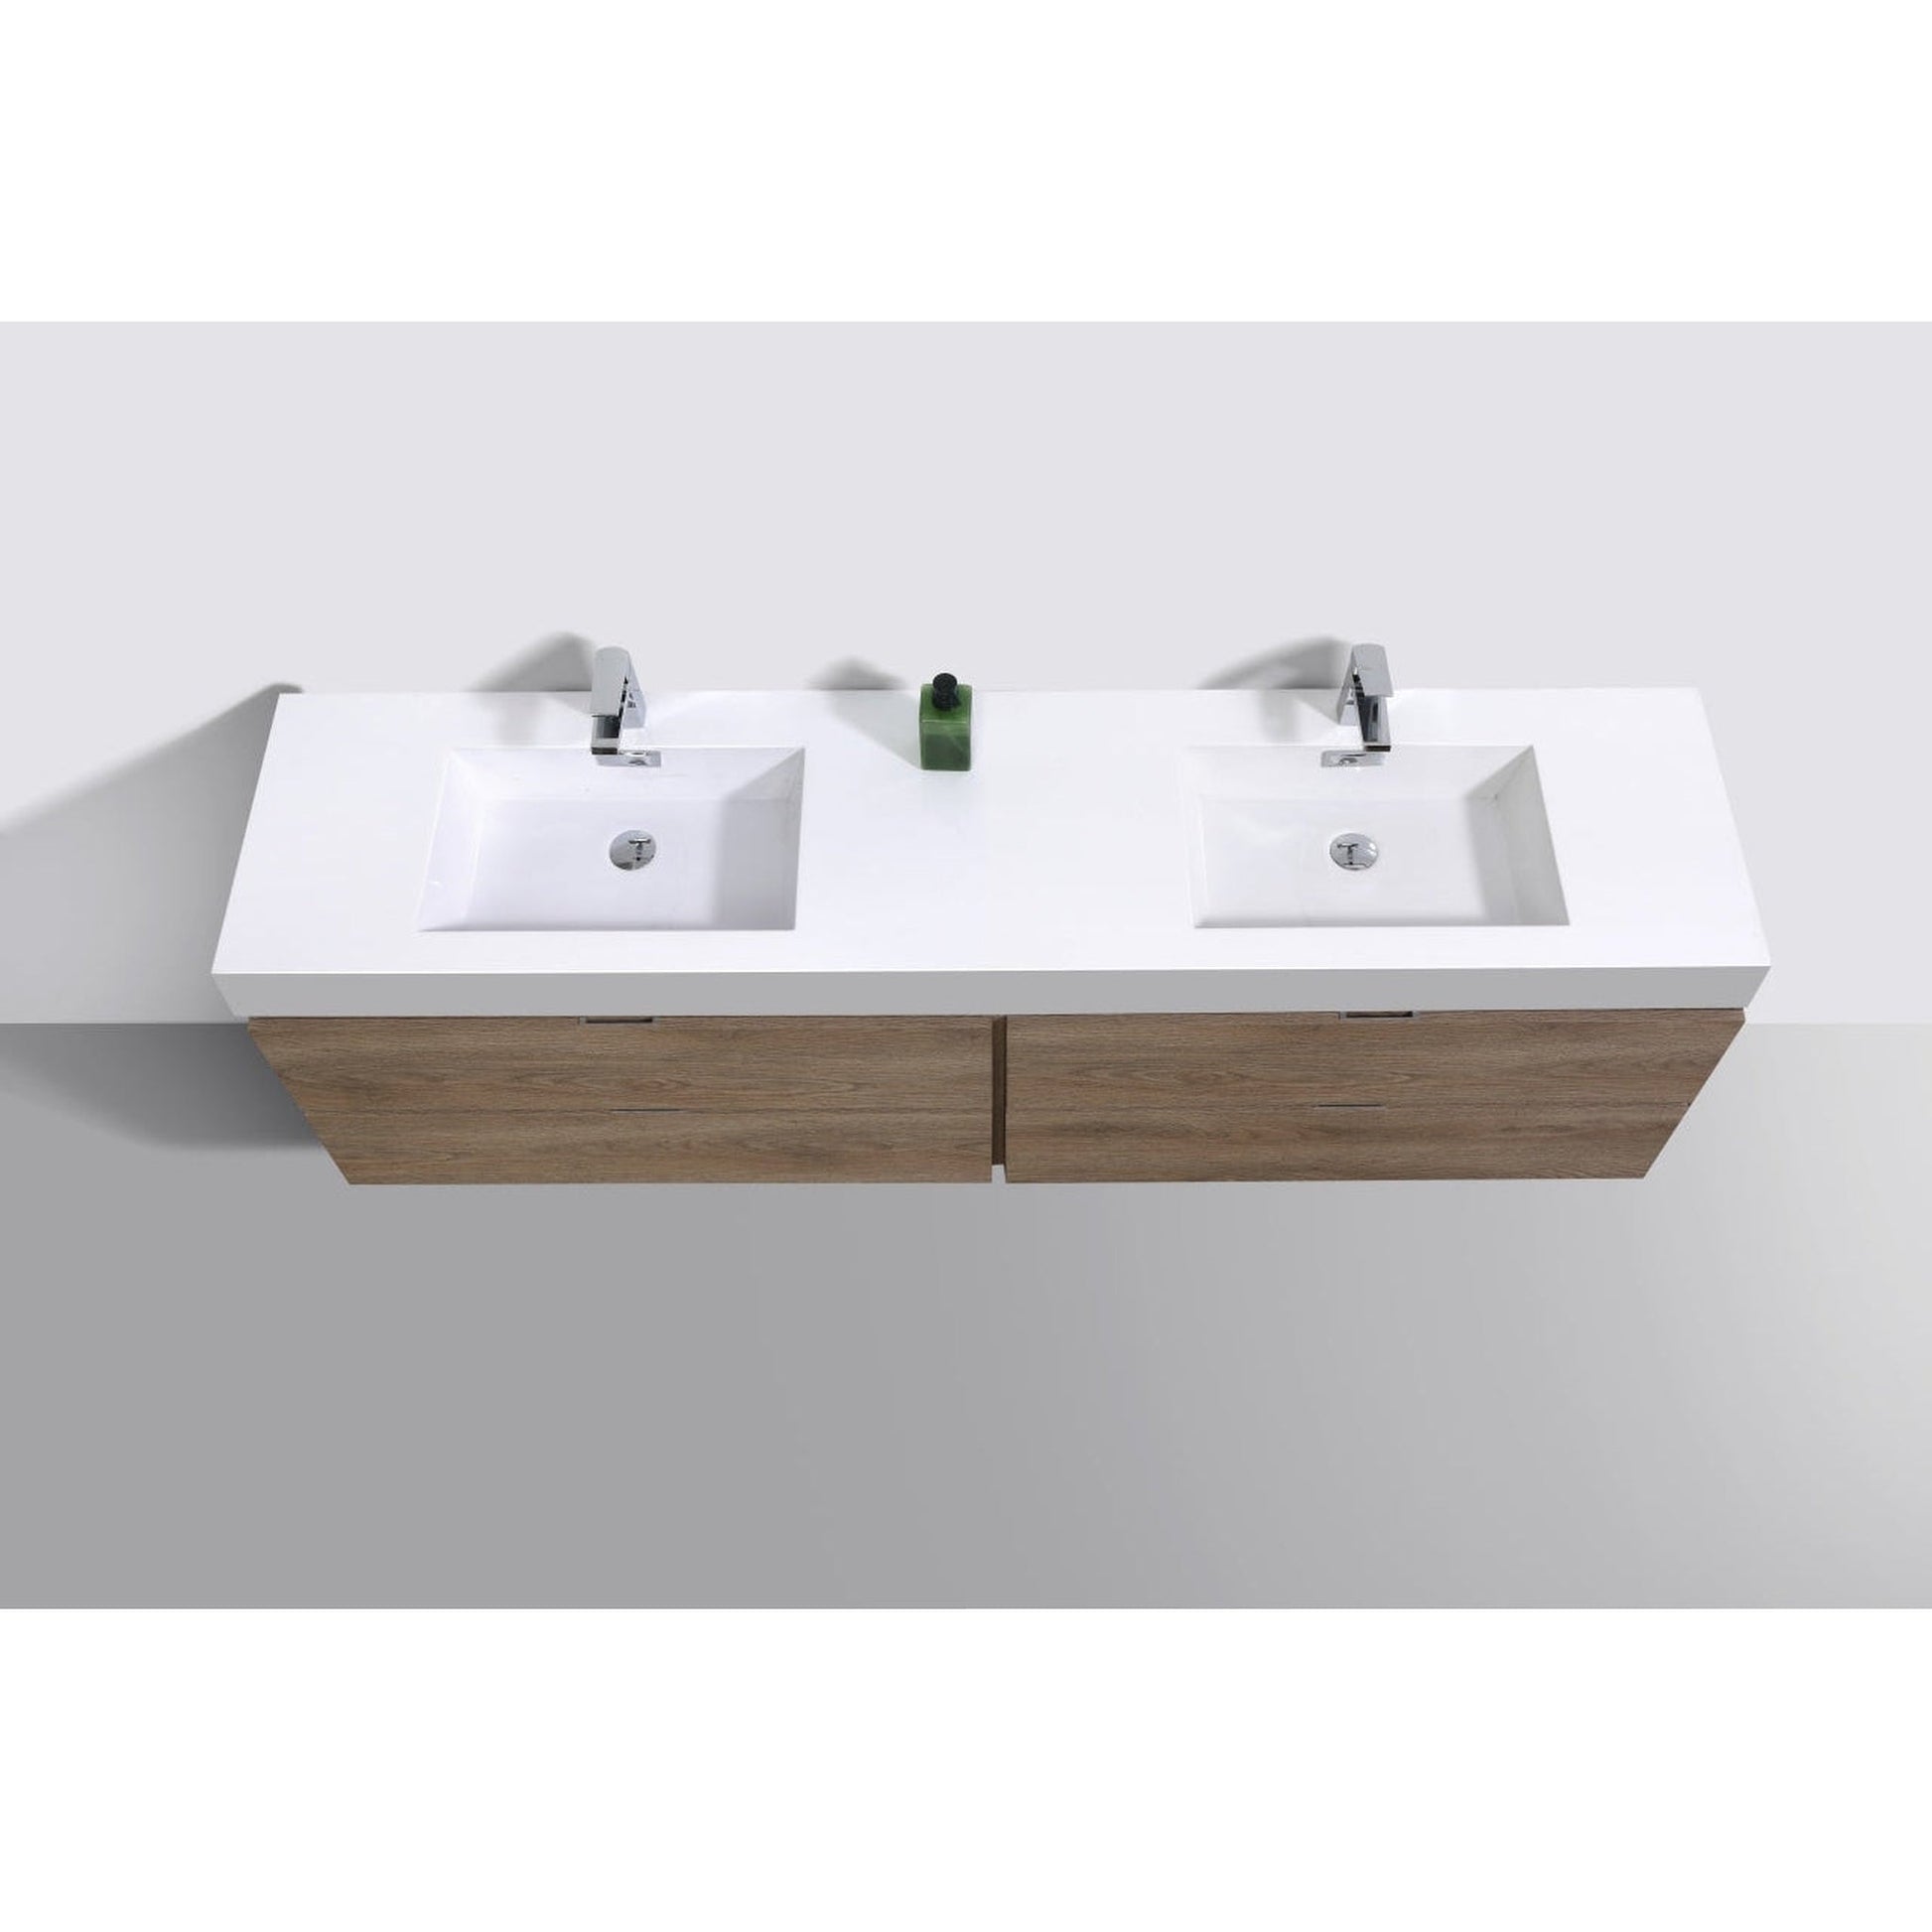 KubeBath Bliss 72" Butternut Wall-Mounted Modern Bathroom Vanity With Double Integrated Acrylic Sink With Overflow